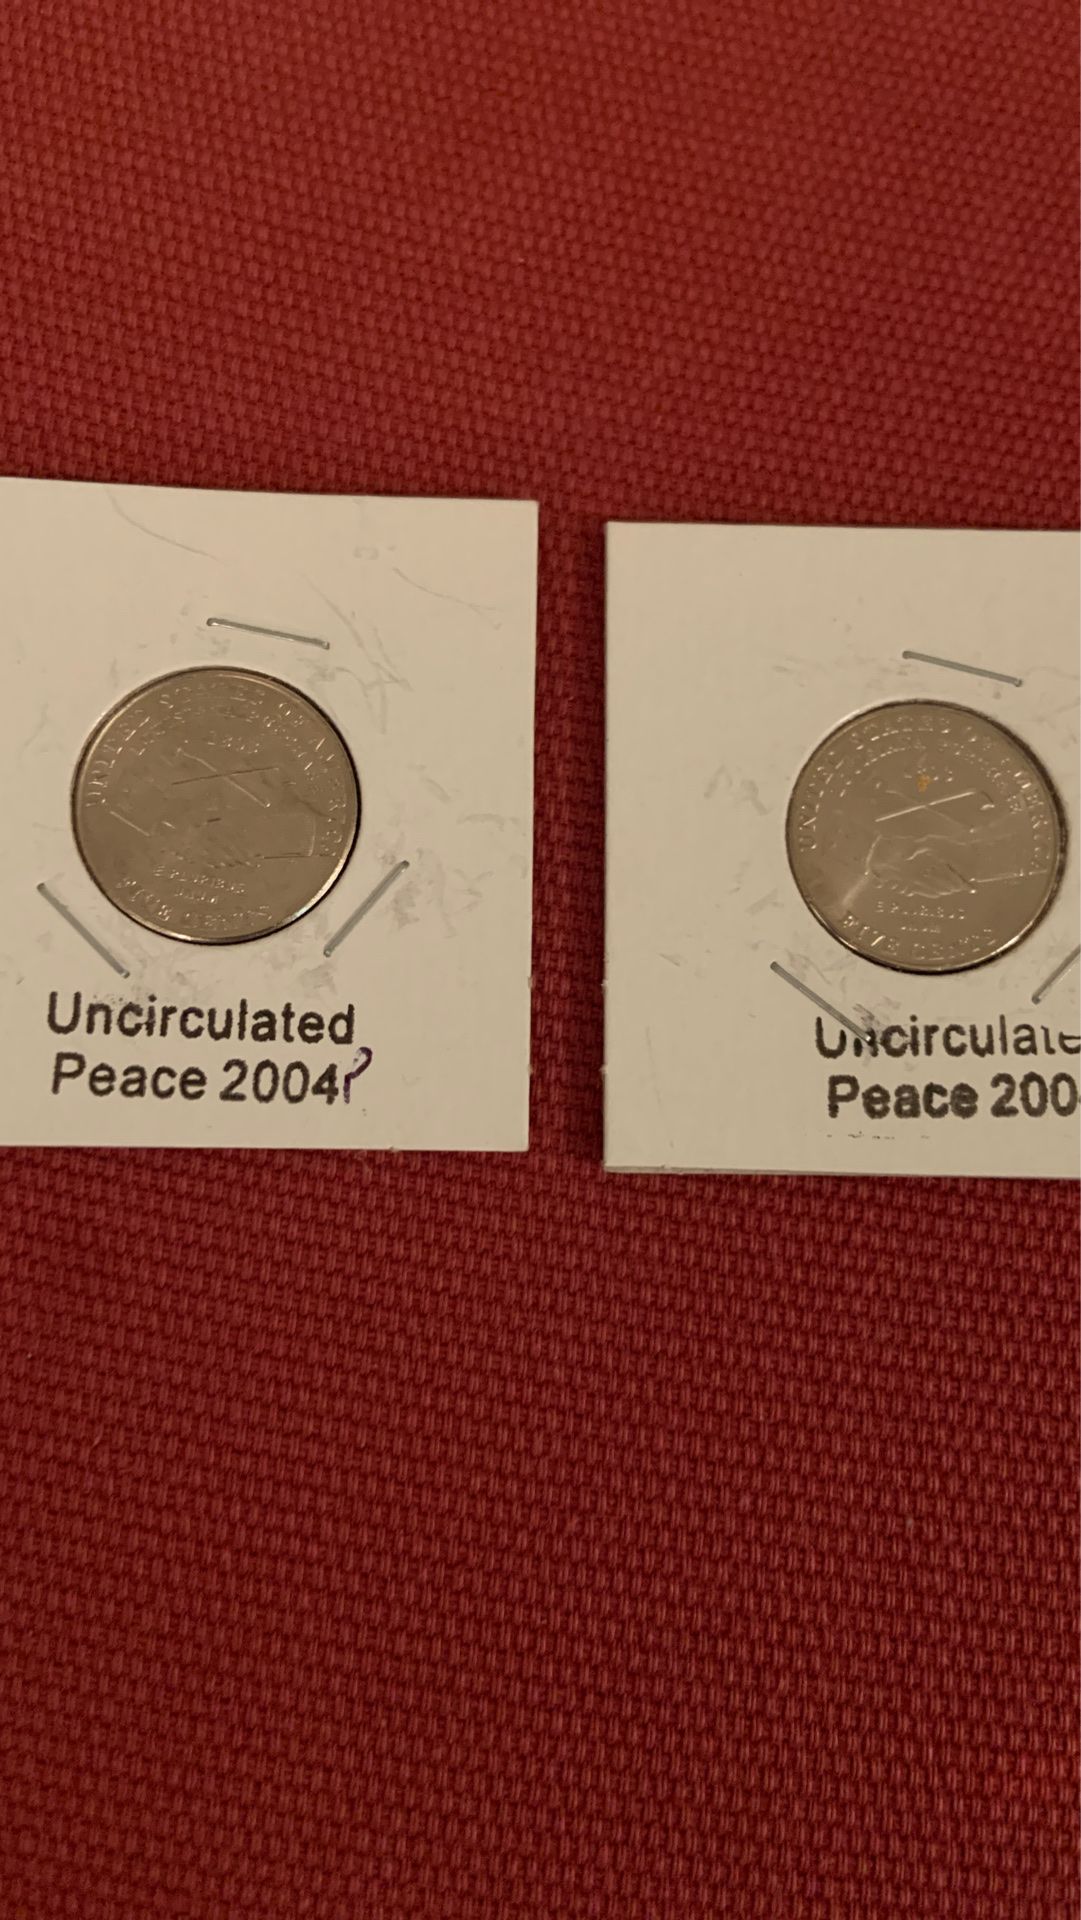 Uncirculated set of 1 Denver an 1 Philadelphia mint 2004 peace nickels